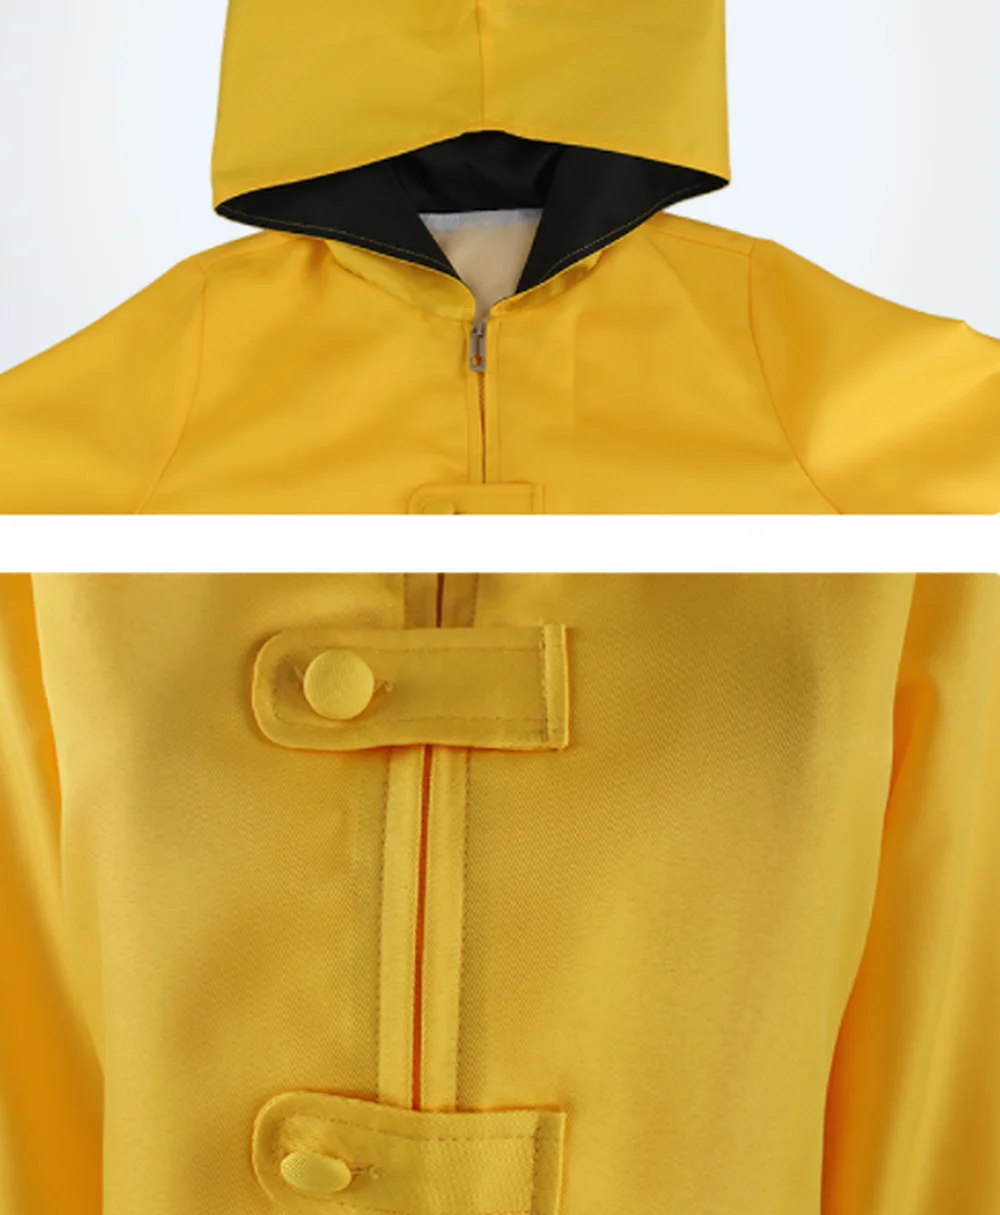 

Game Costumes Little Nightmares Six Cosplay Raincoat Yellow PU Leather Waterproof Coats Adult Size Halloween Horror Costume